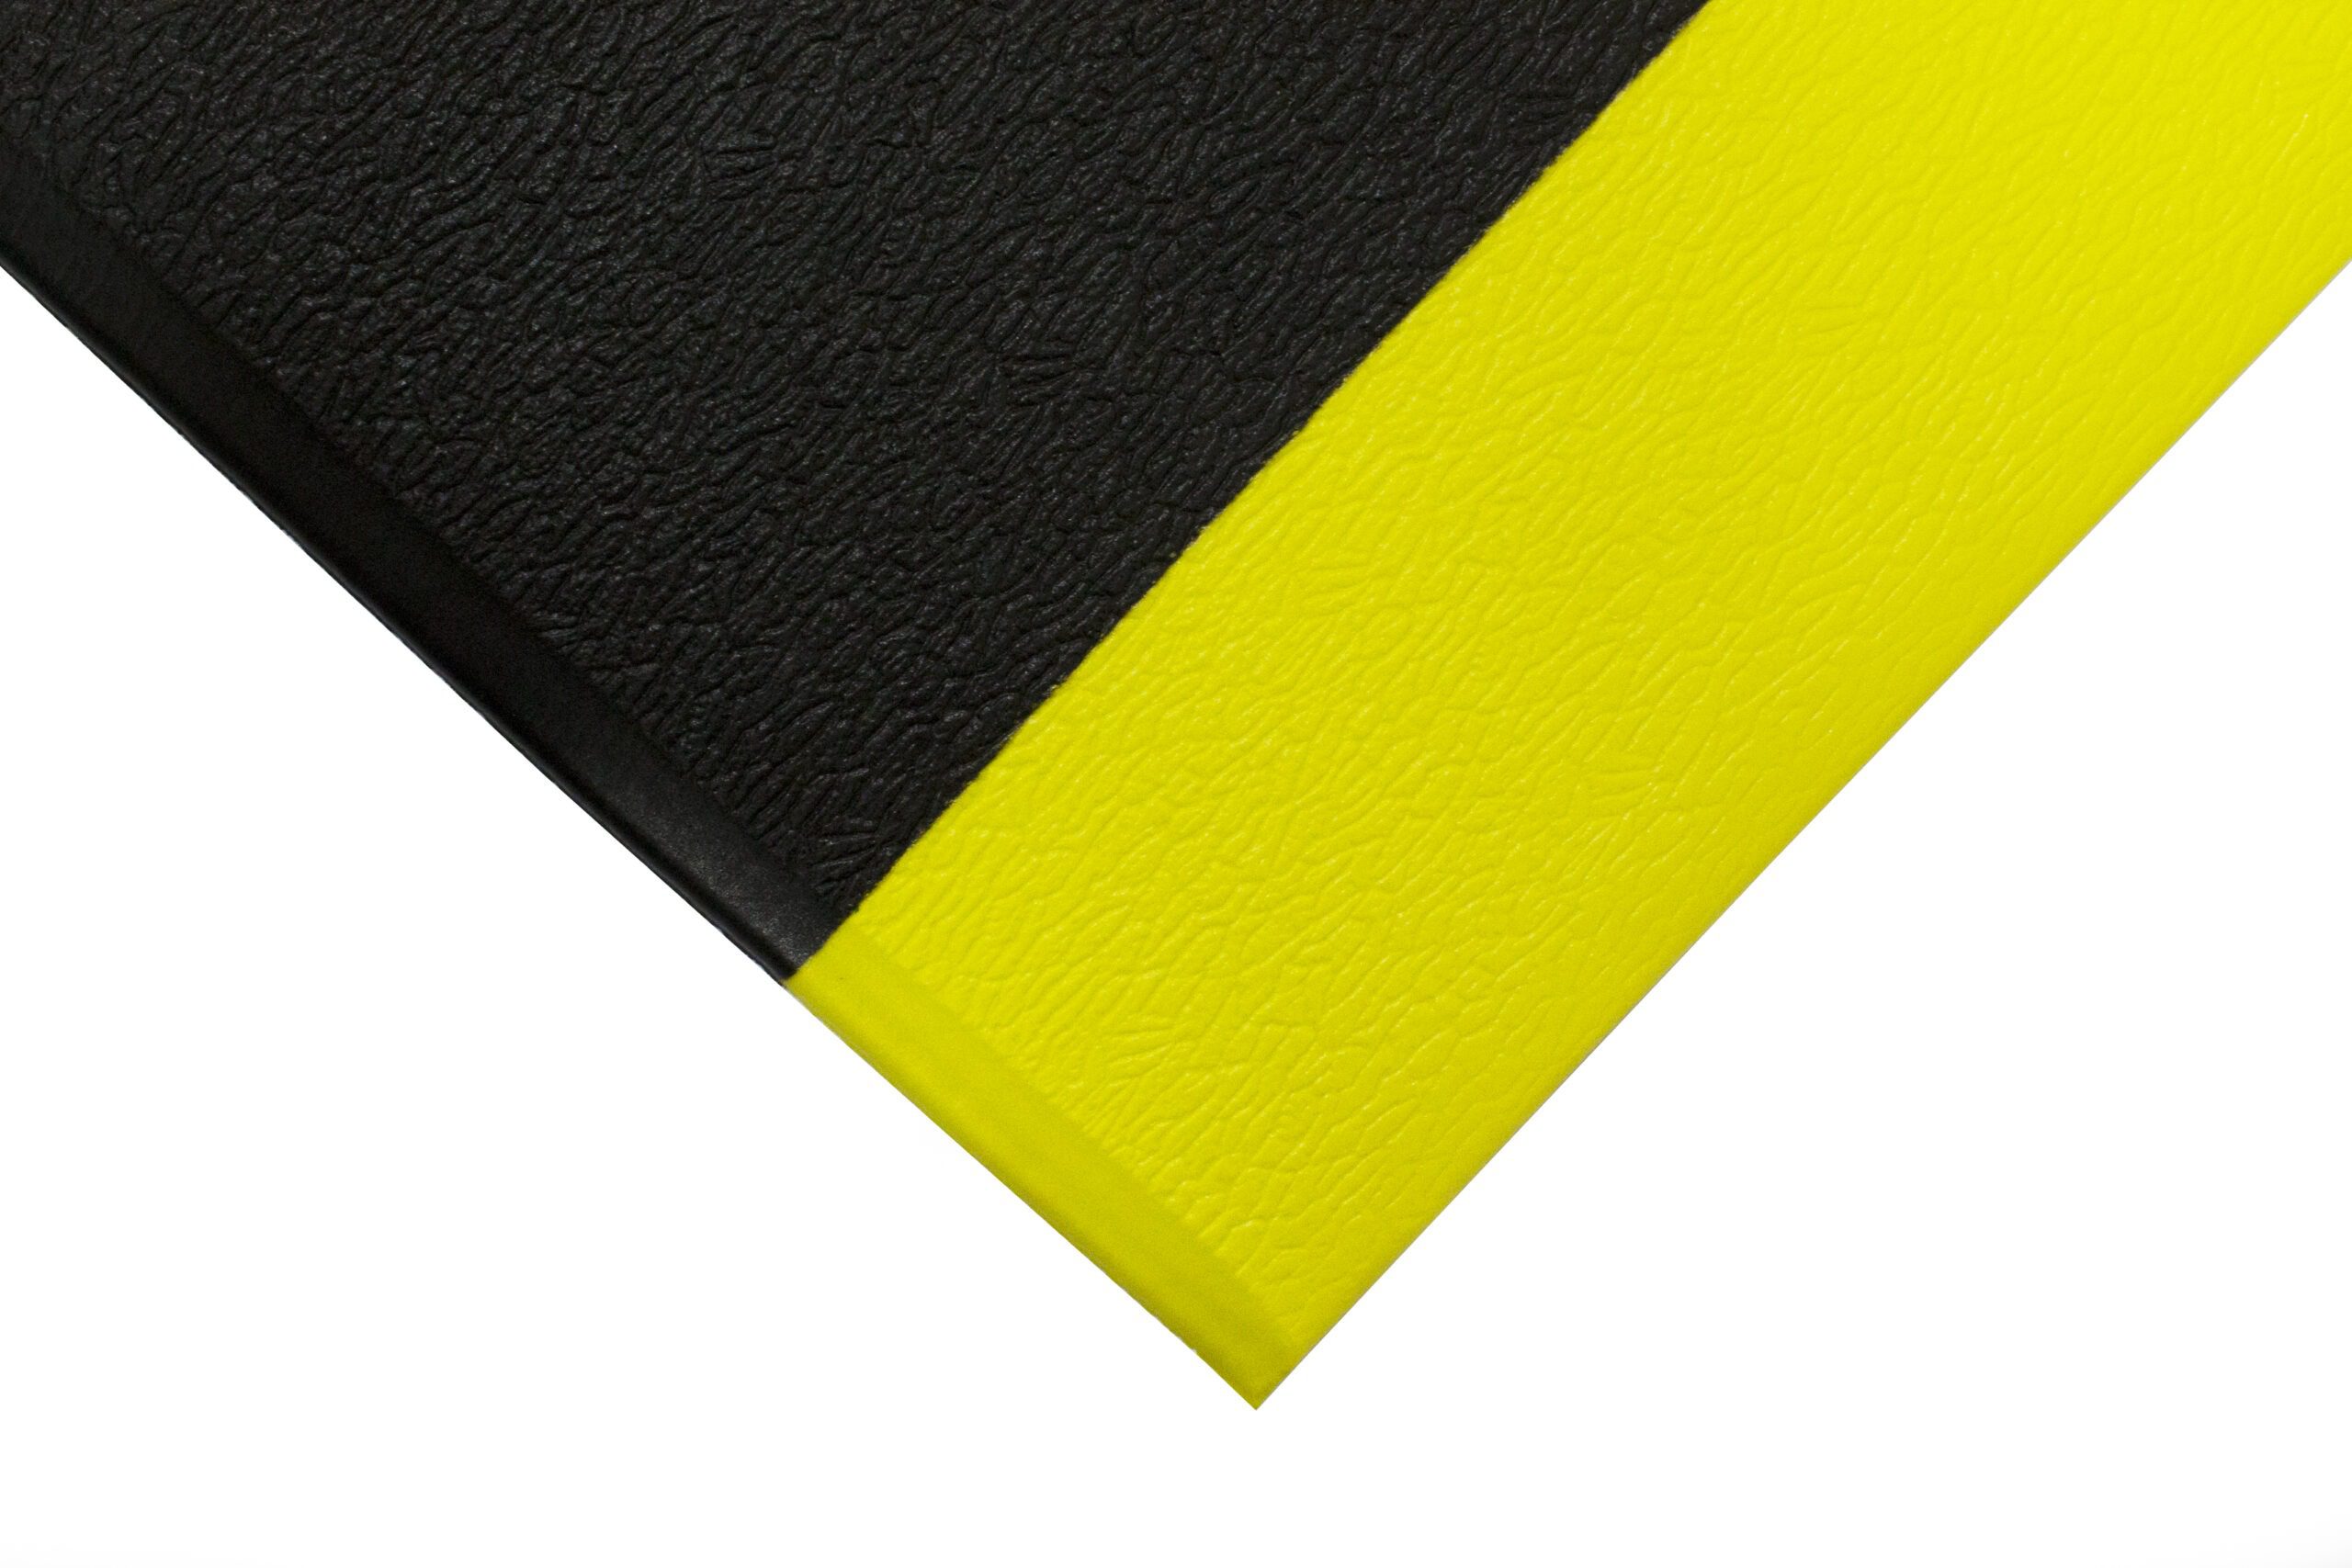 Orthomat Standard Safety - Black/Yellow